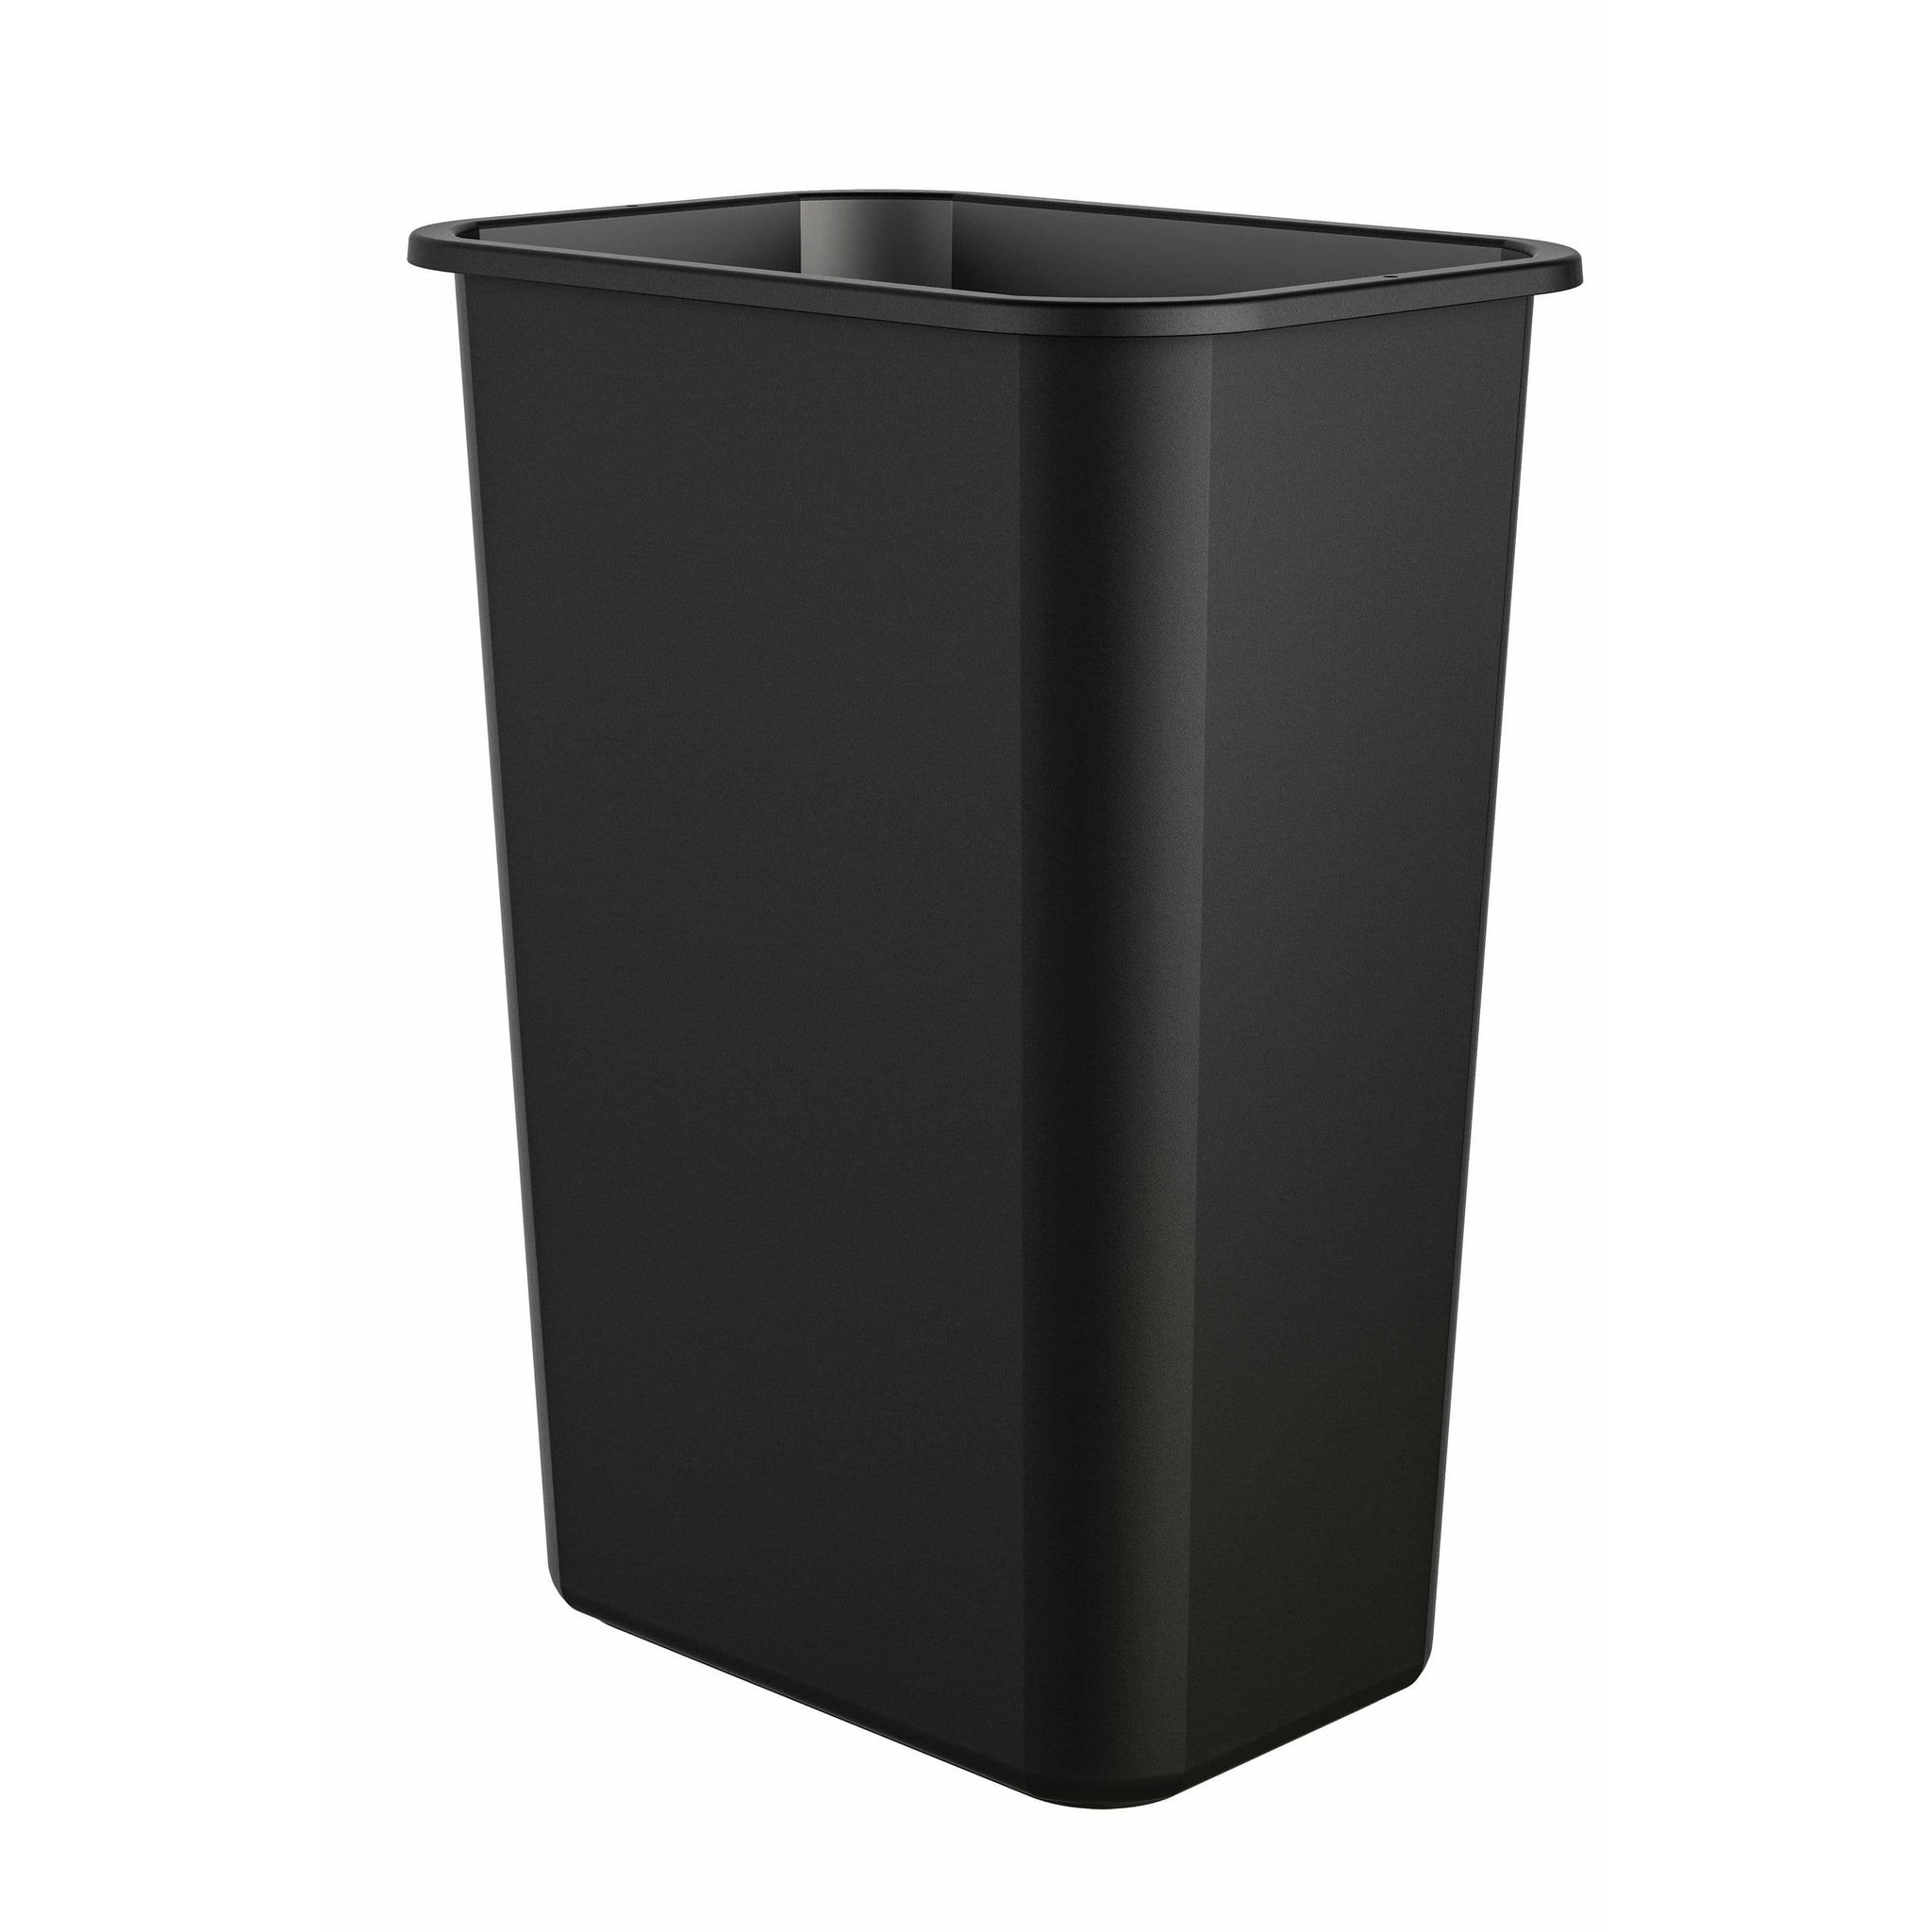 Suncast Commercial 7 gal. Black Plastic Trash Can (12-Pack)